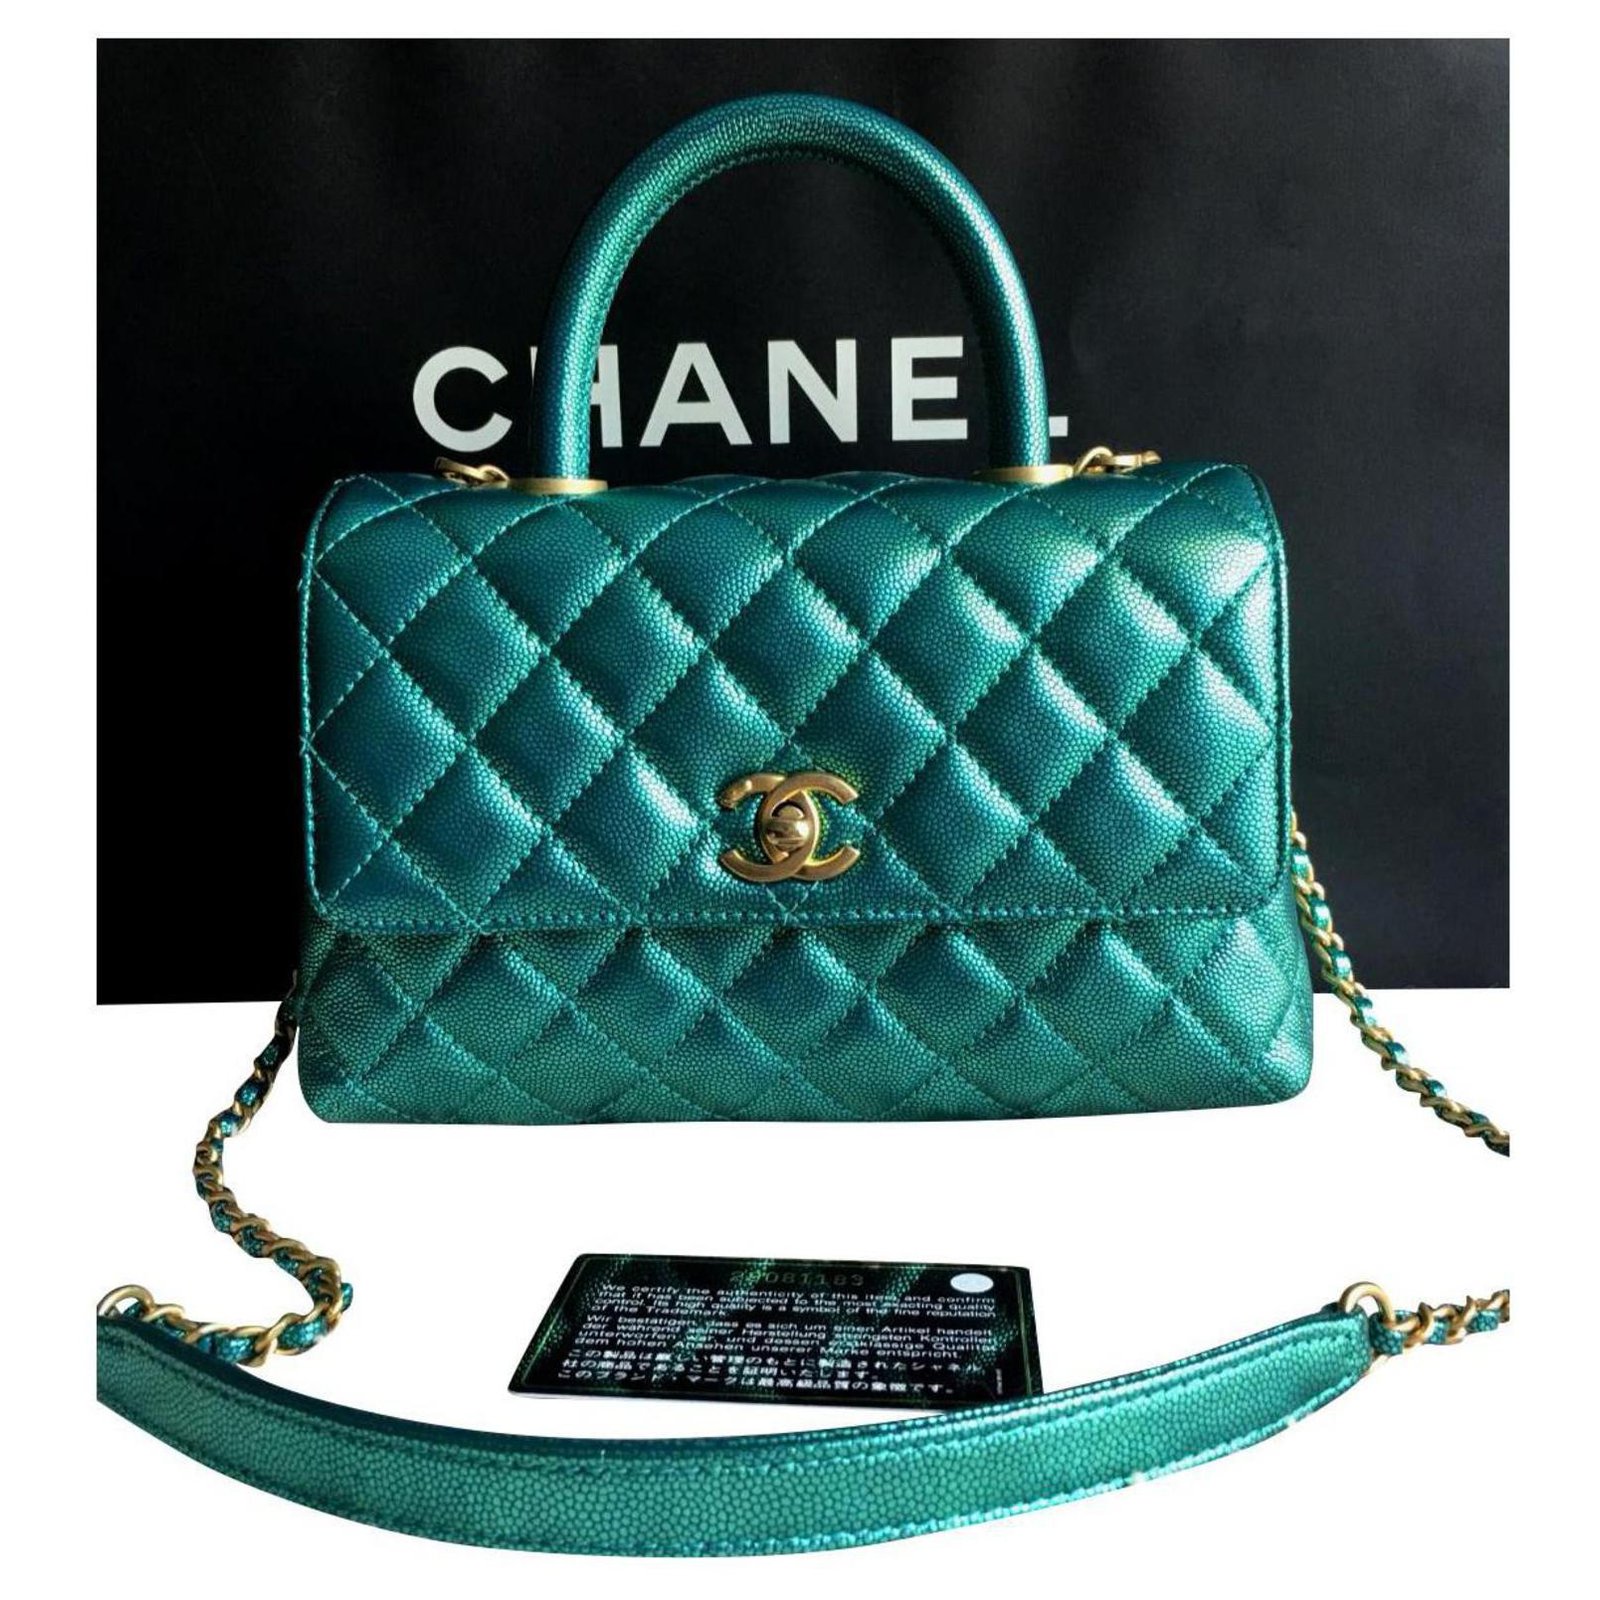 Chanel Small Coco Handle bag in Iridescent green caviar skin